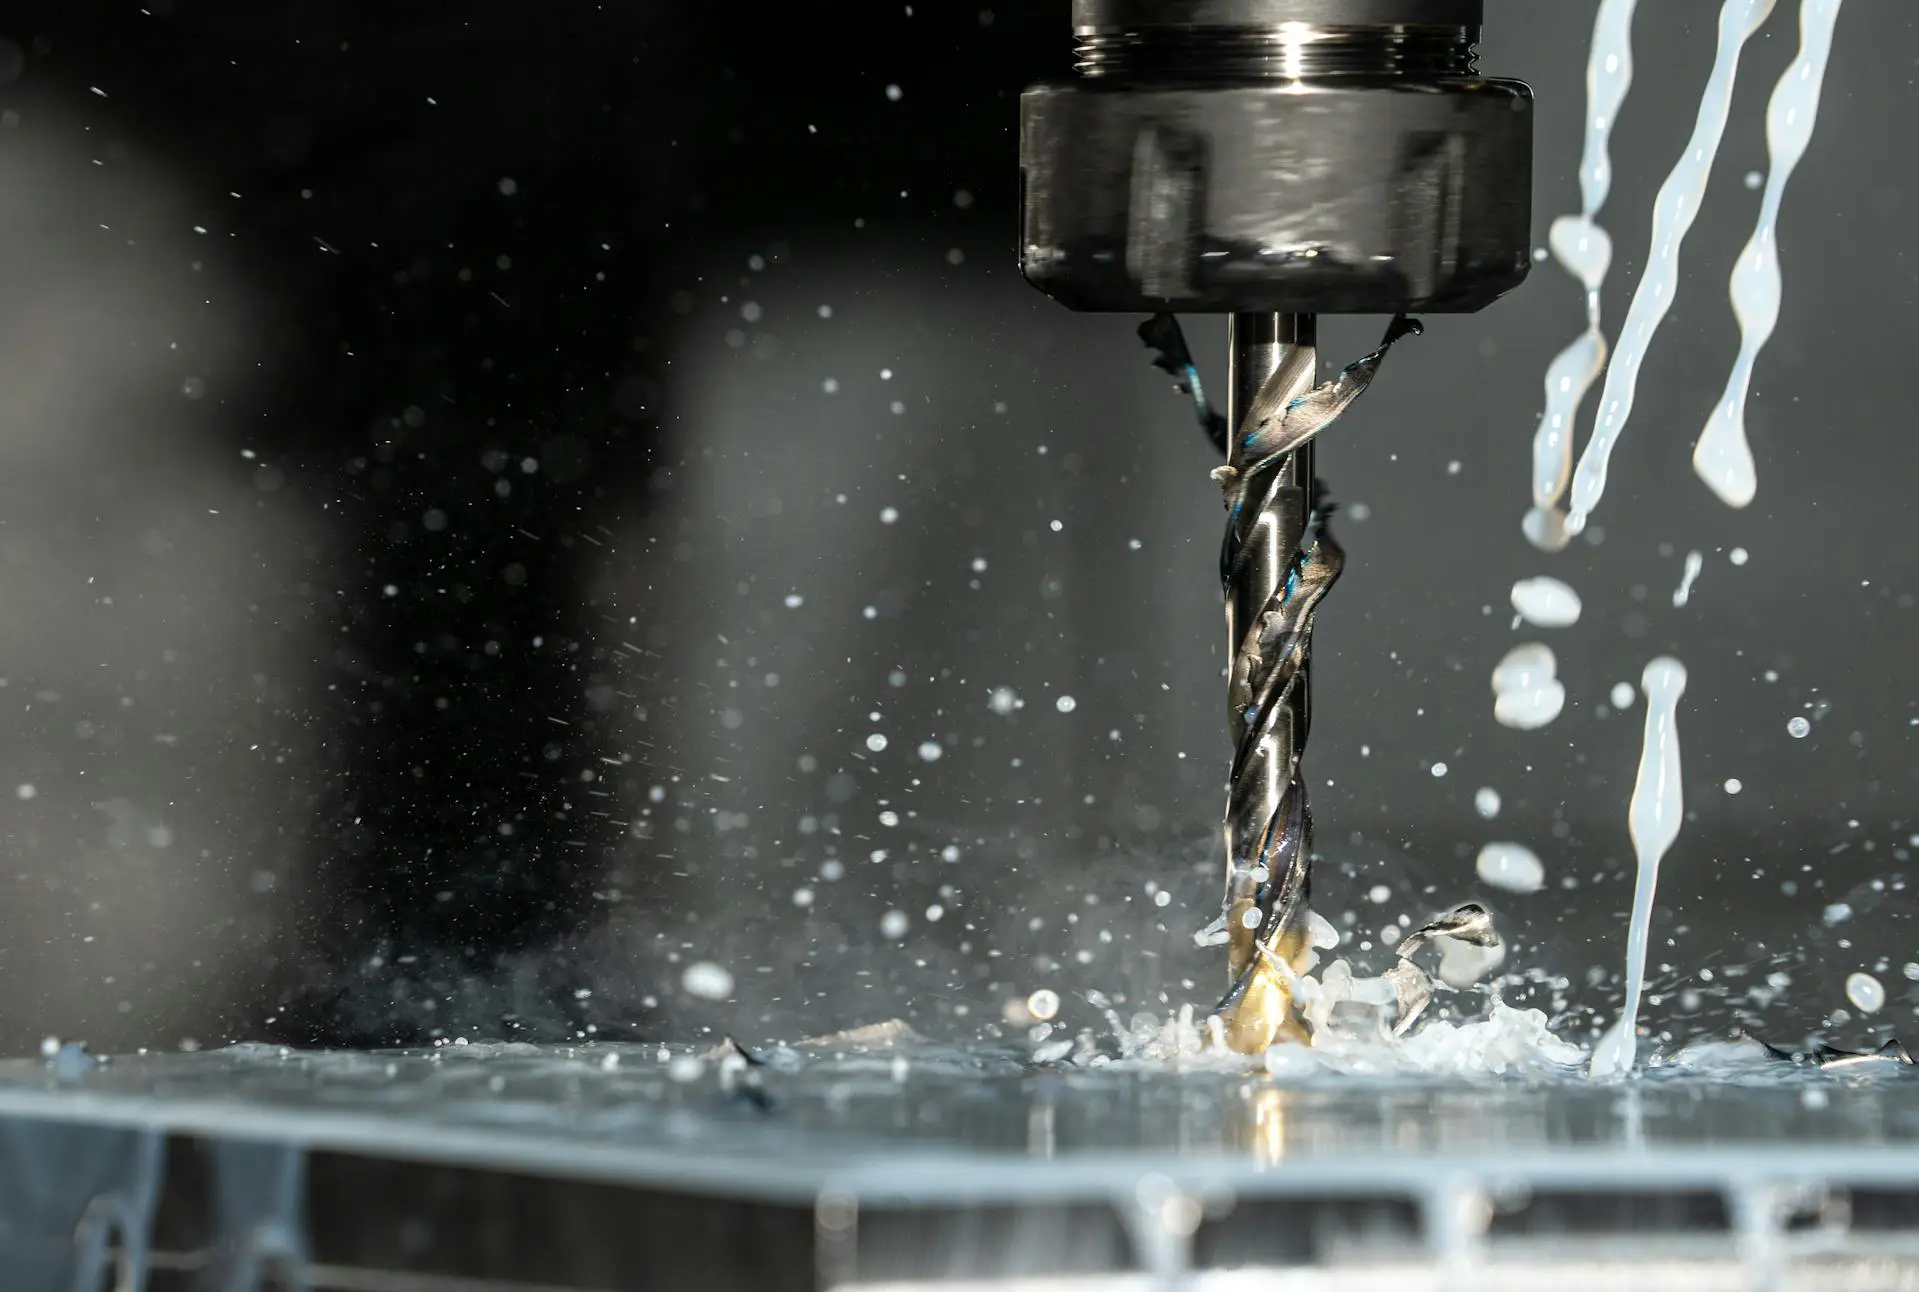 High-precision CNC machining equipment in a Proto Tech's modern industrial workshop